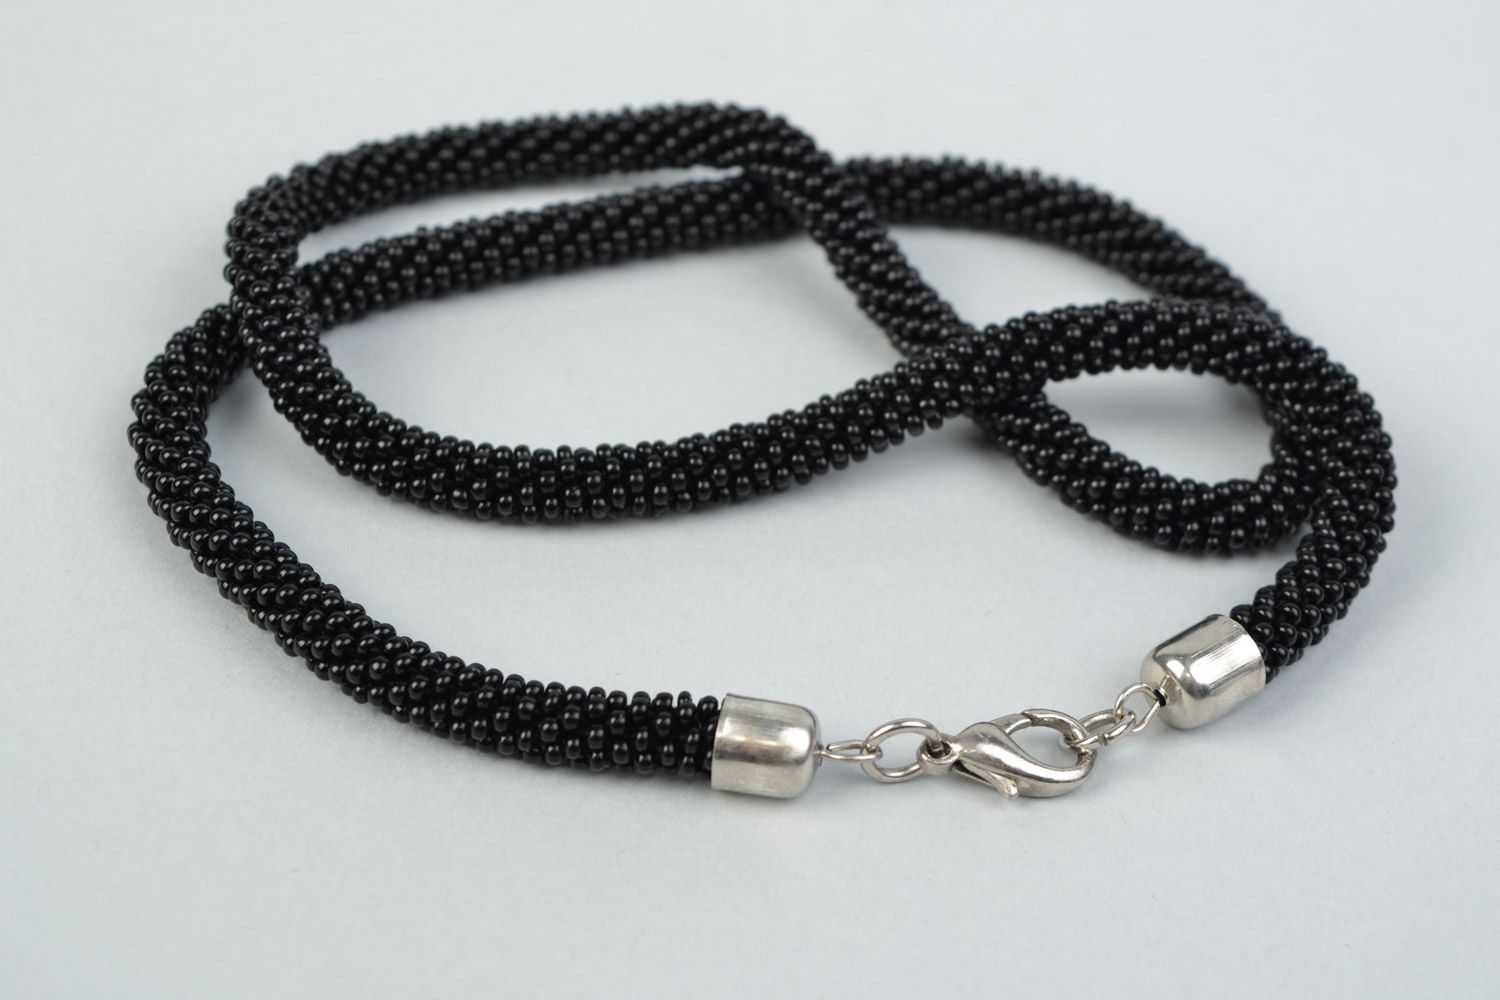 Handmade long elegant Czech beads necklace in black color for girls photo 5